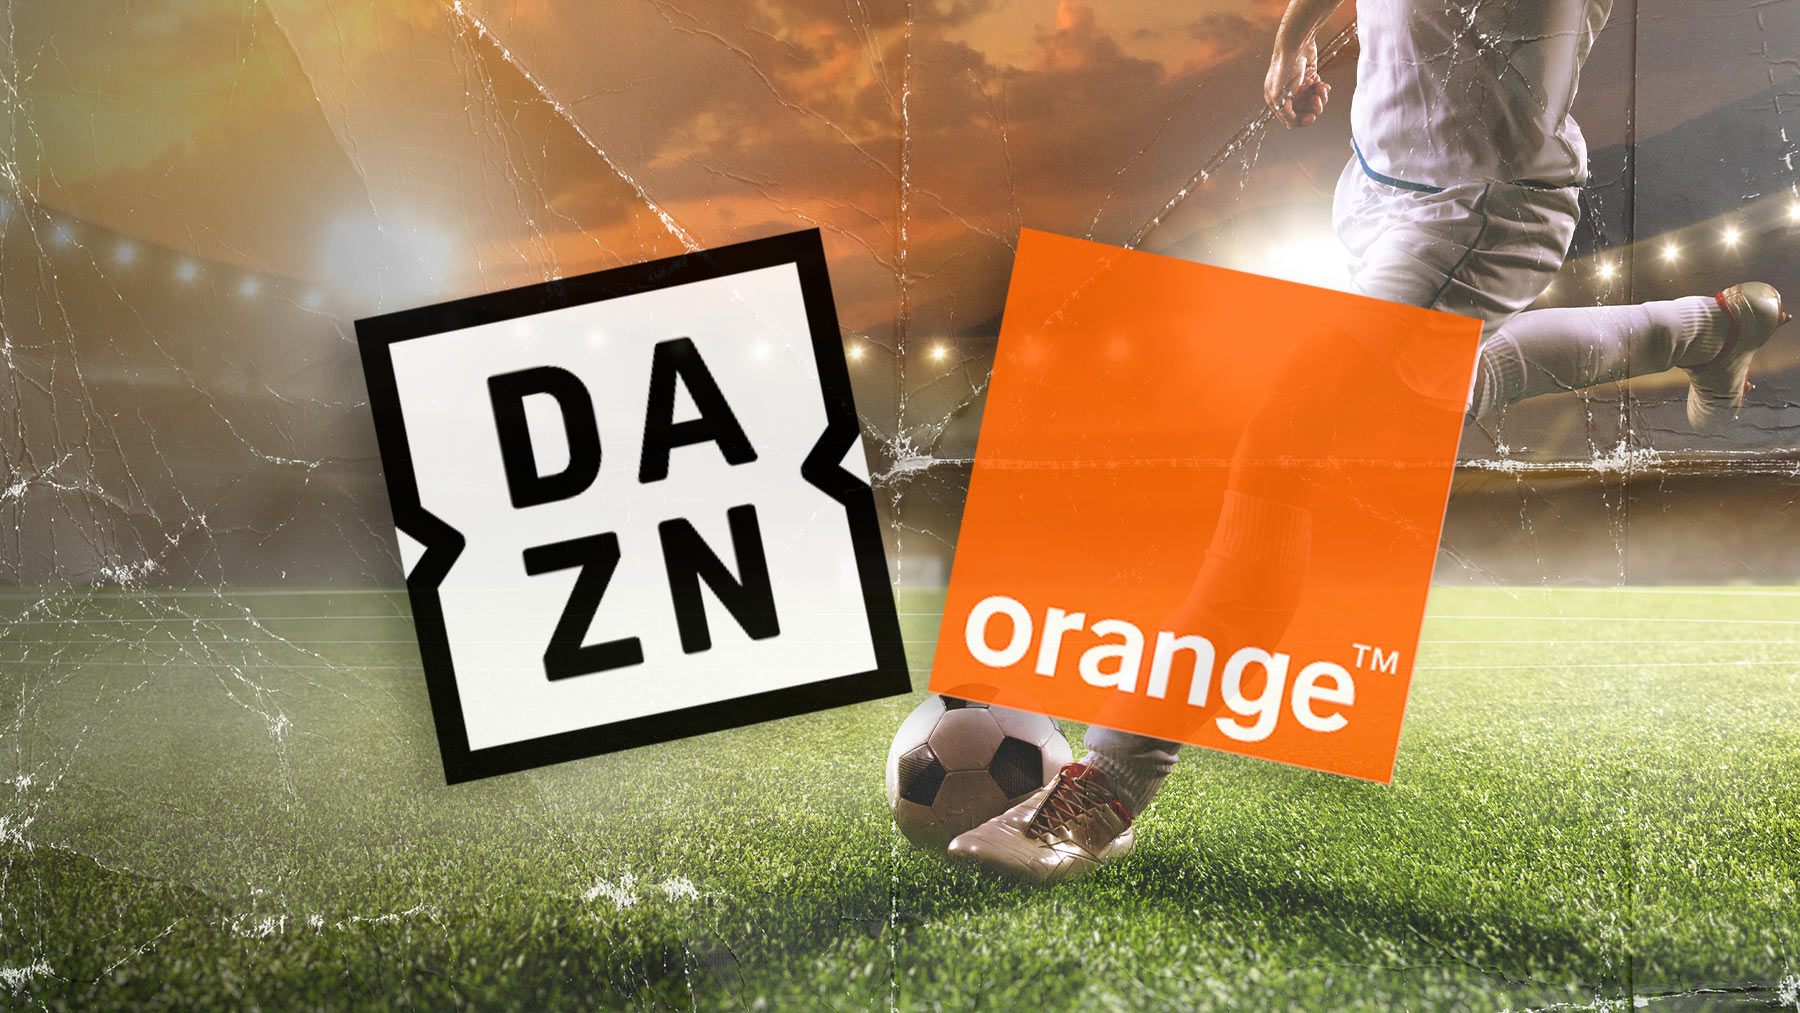 Orange llega a un acuerdo con Dazn para retransmitir fútbol